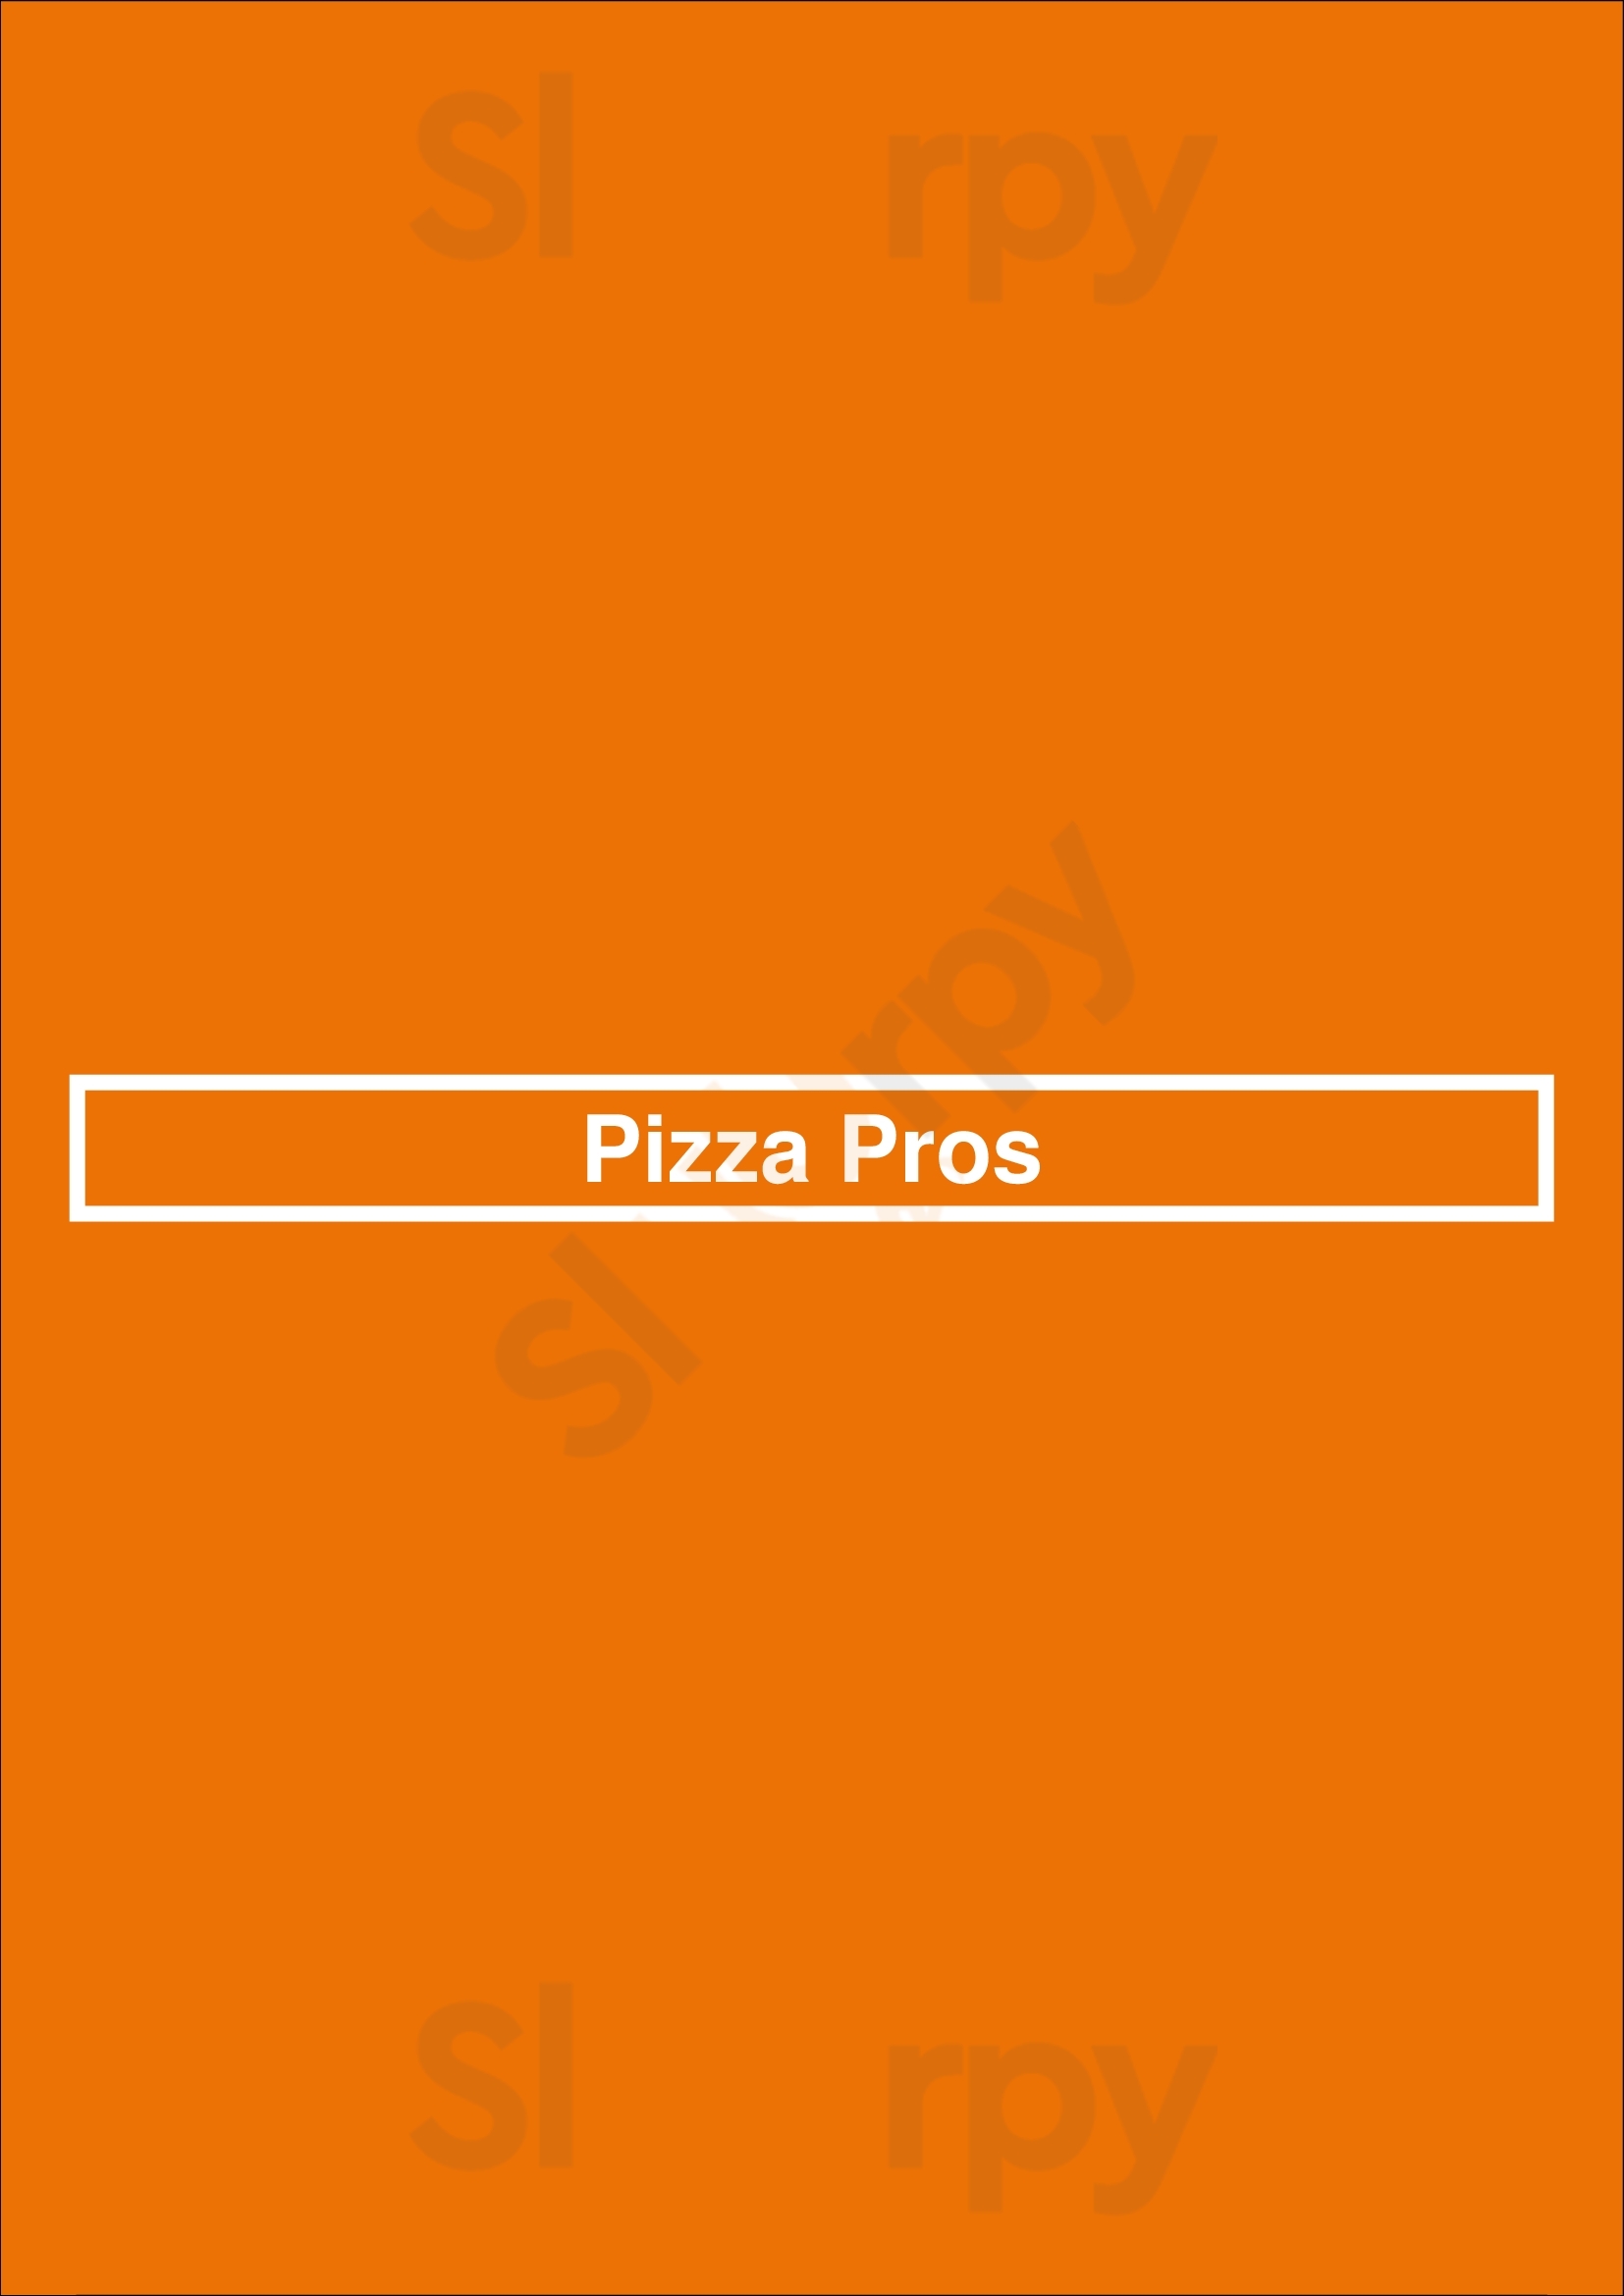 Pizza Pros Toronto Menu - 1